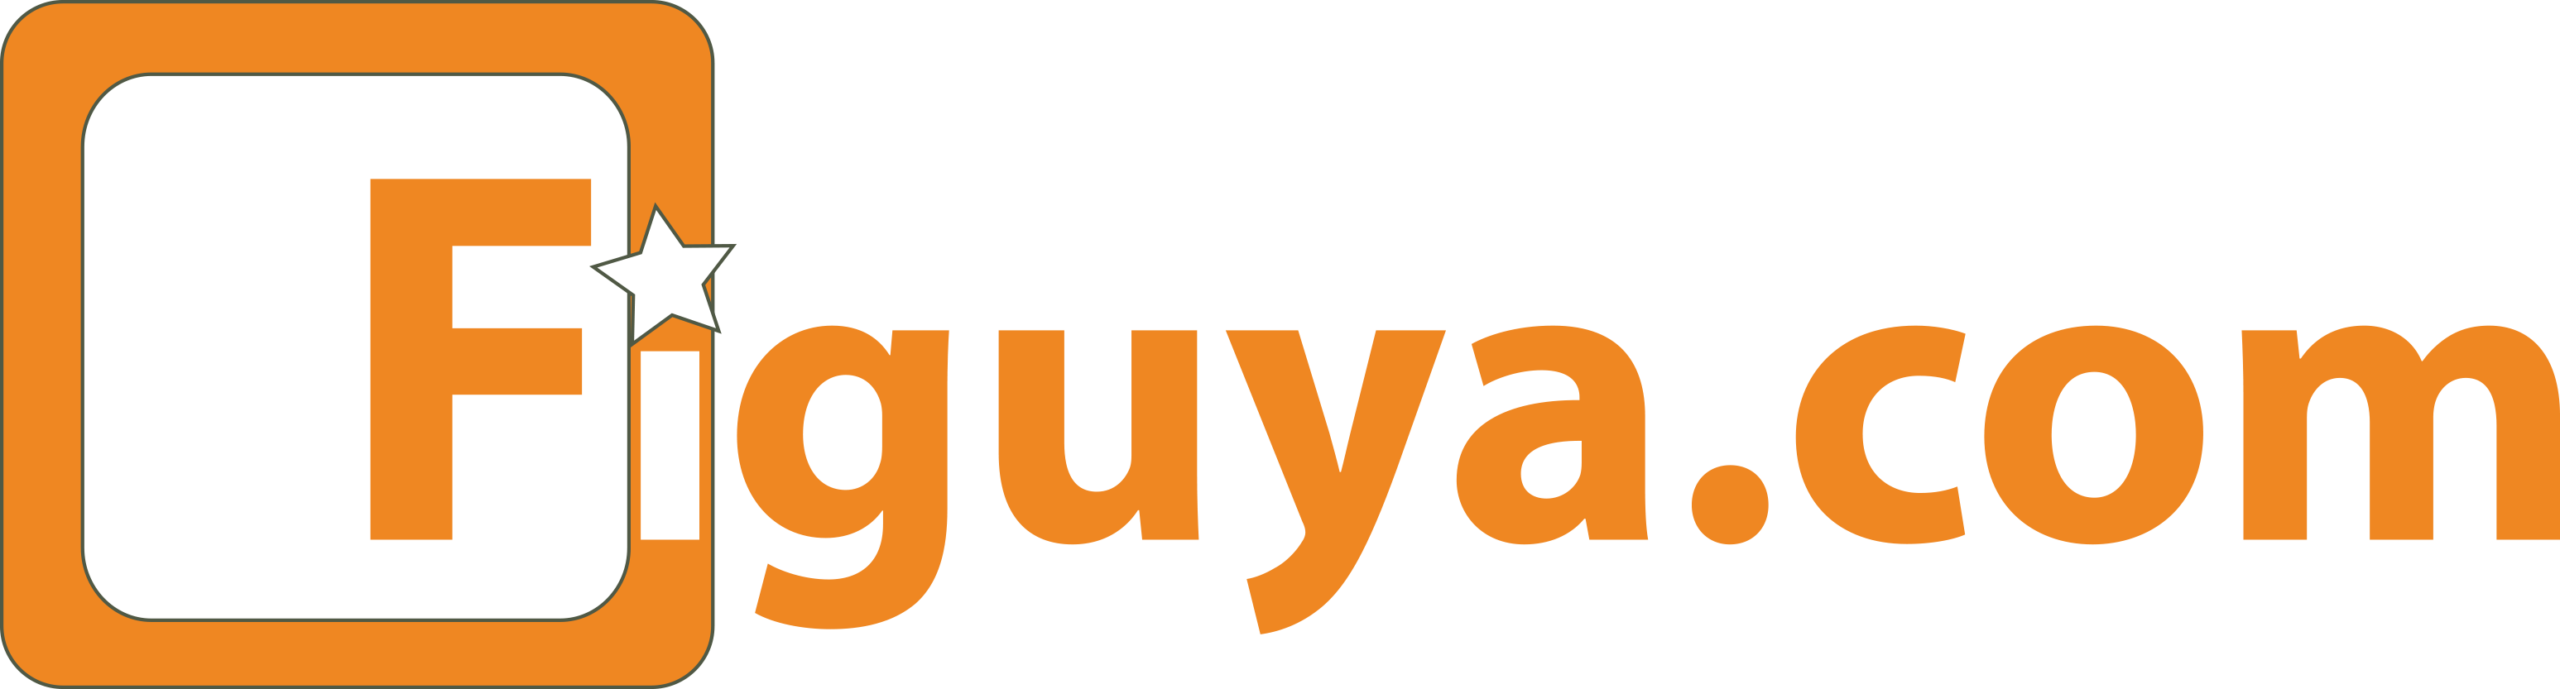 Figuya.com